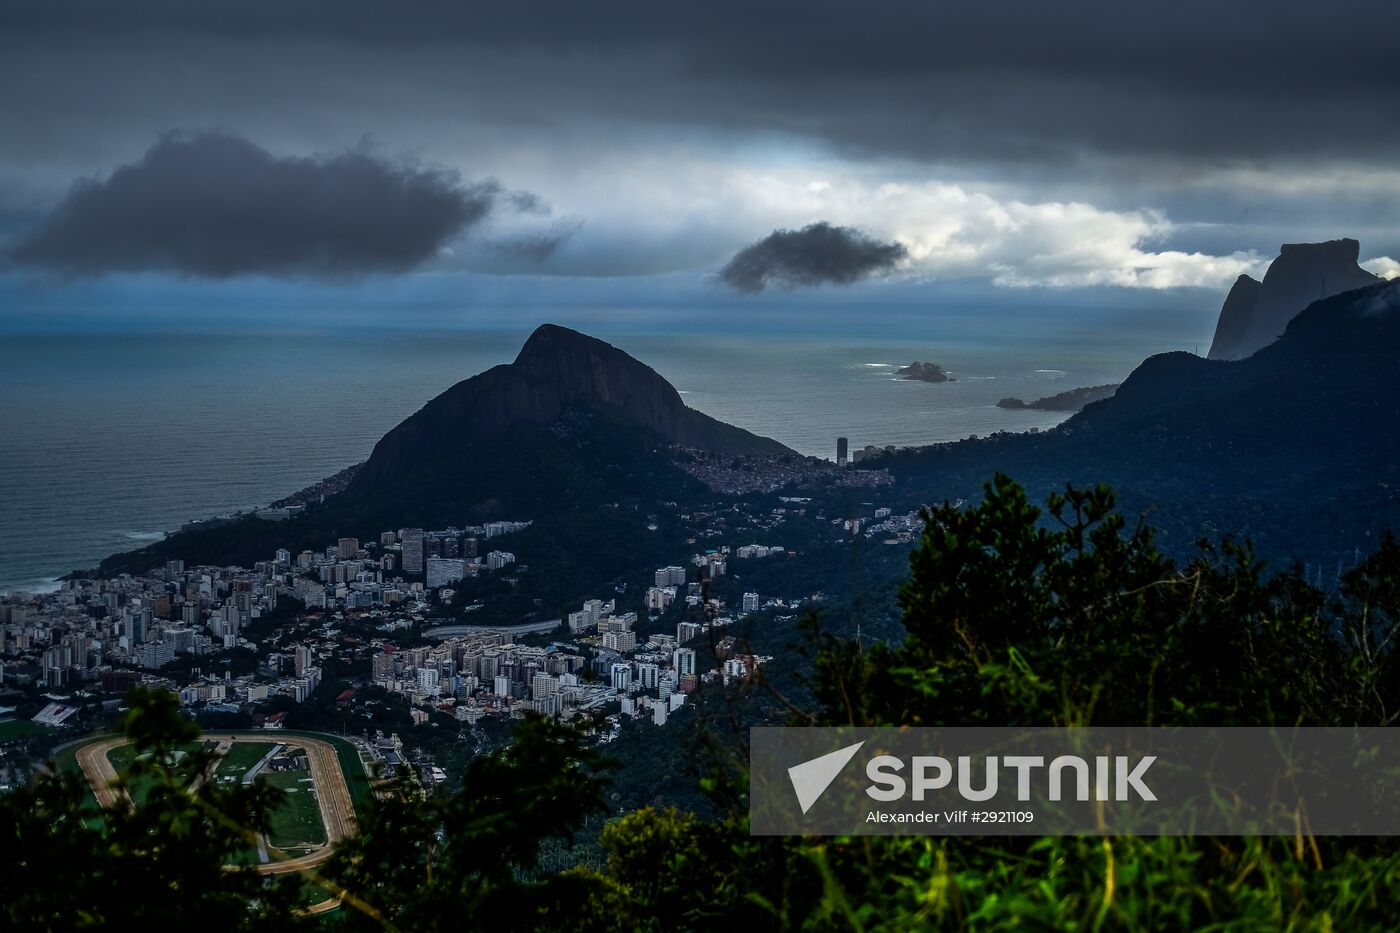 Cities of the world. Rio de Janeiro